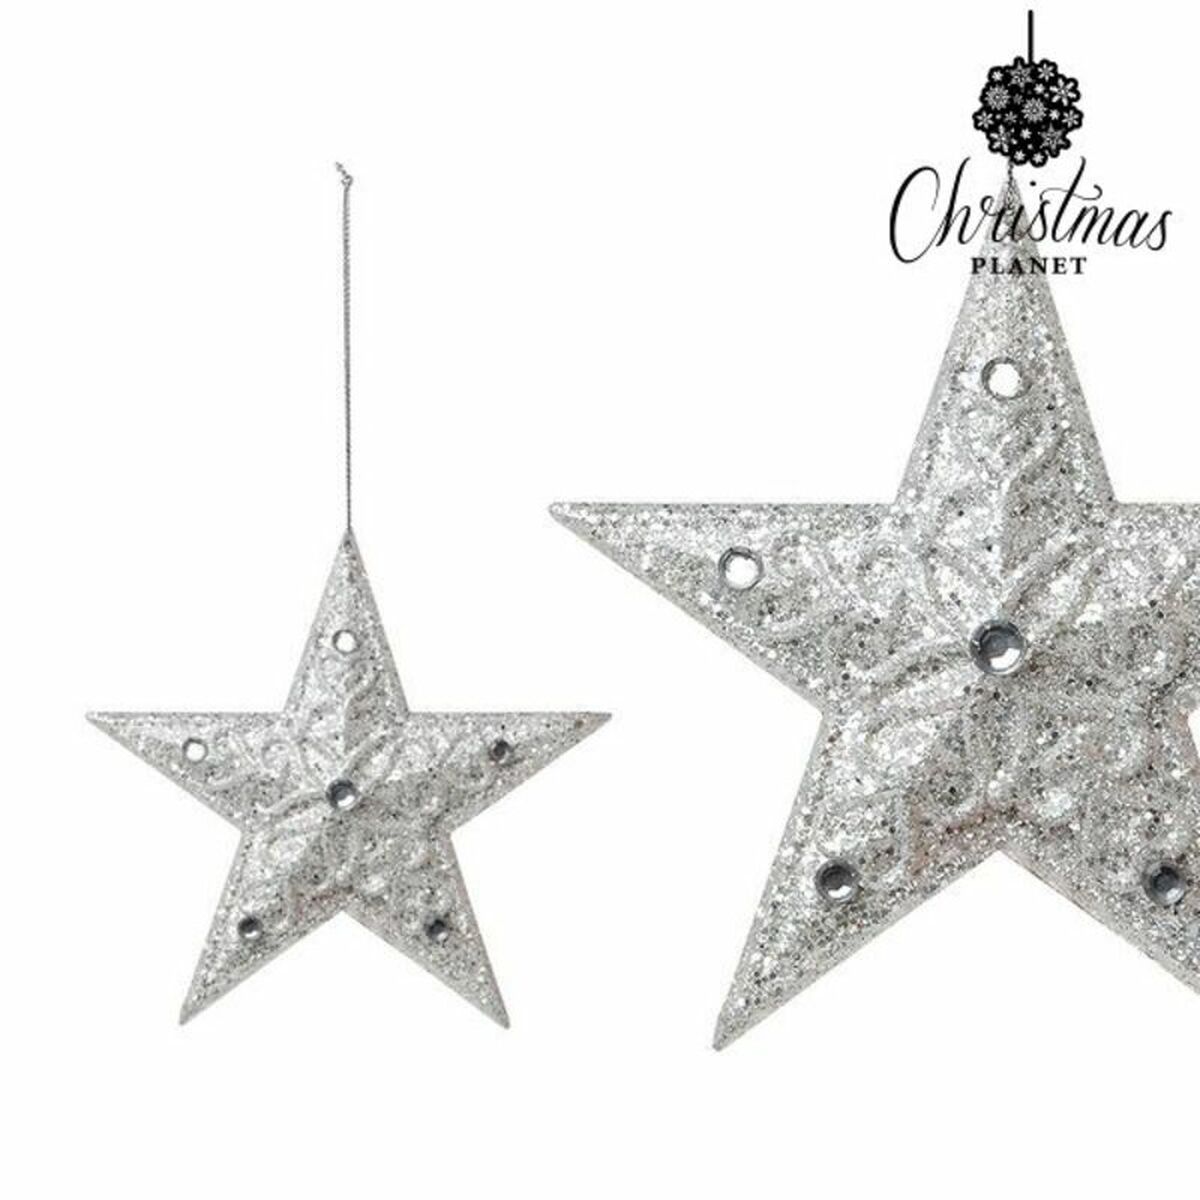 Ornament de Crăciun Christmas Planet 8179 (10 cm) Argintiu